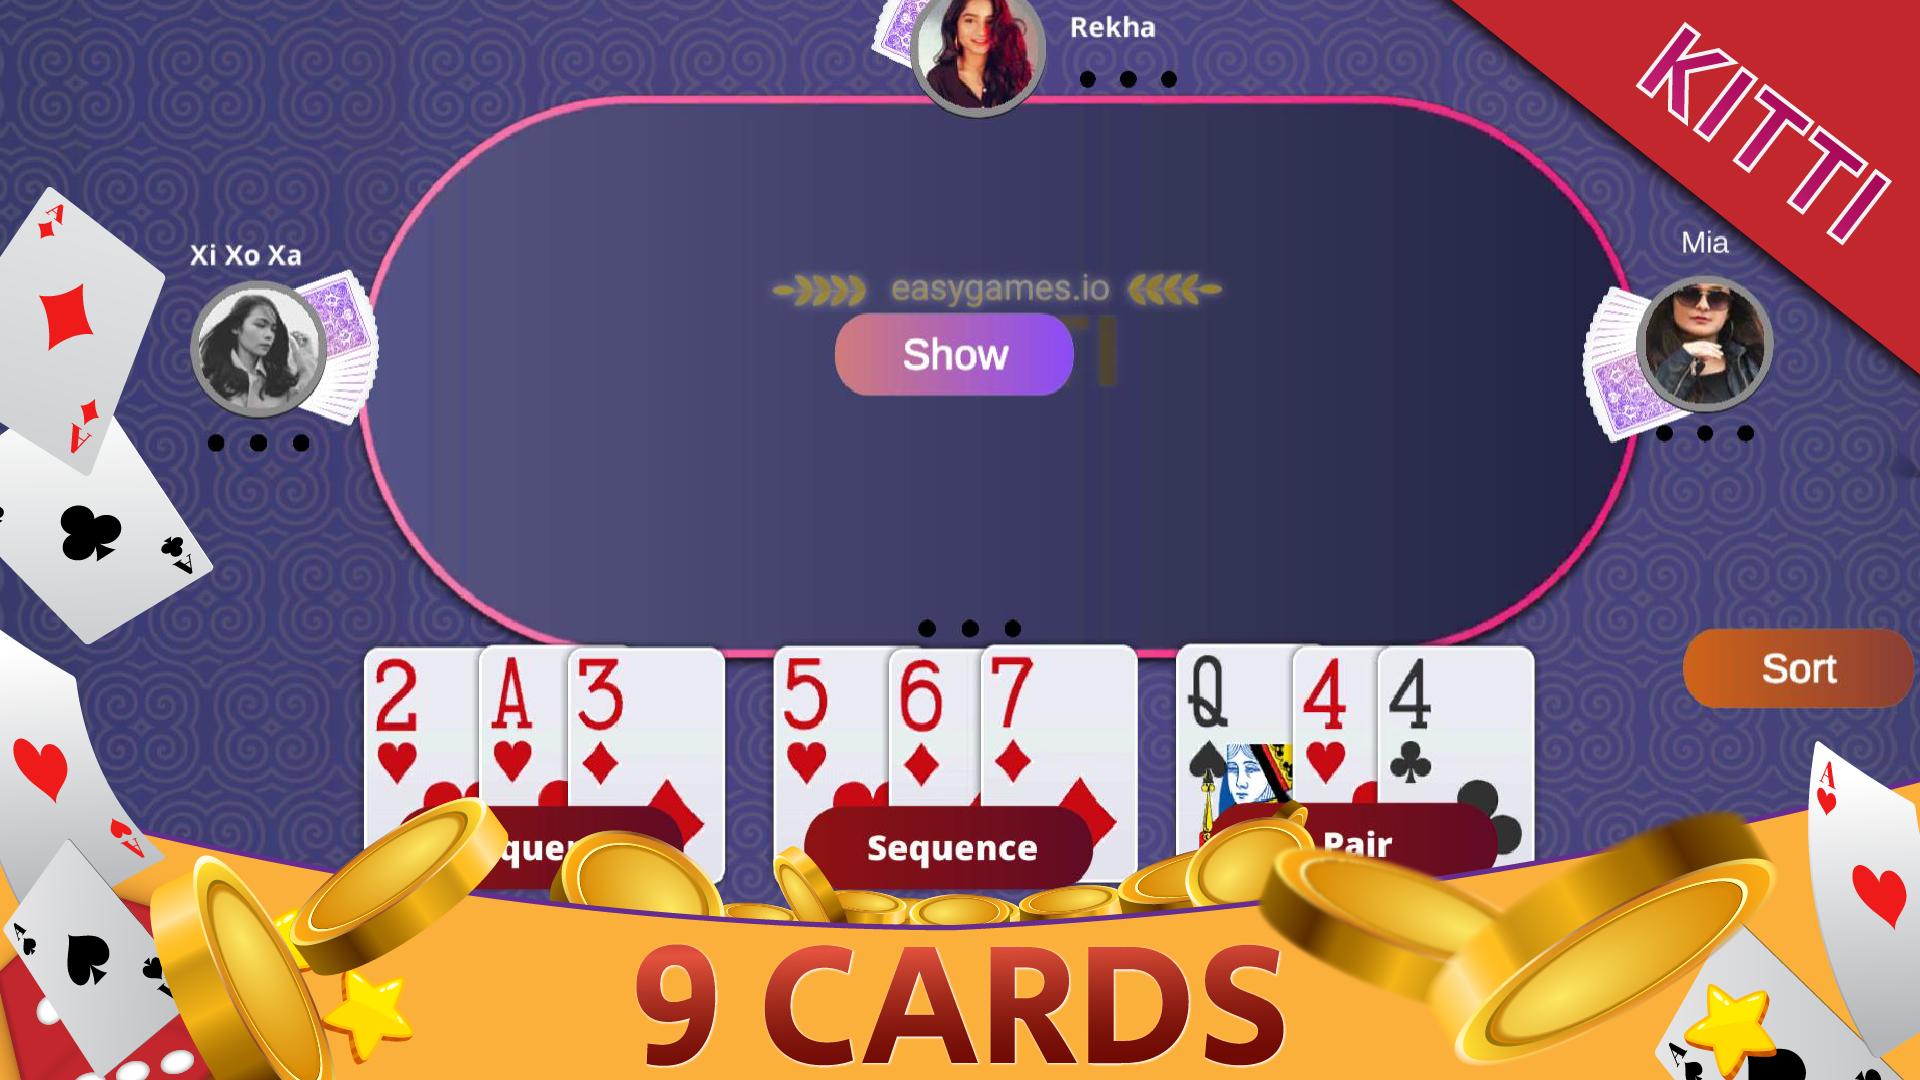 Callbreak, Ludo, Rummy & 9 Card Game -Easygames.io 20210120 Screenshot 15